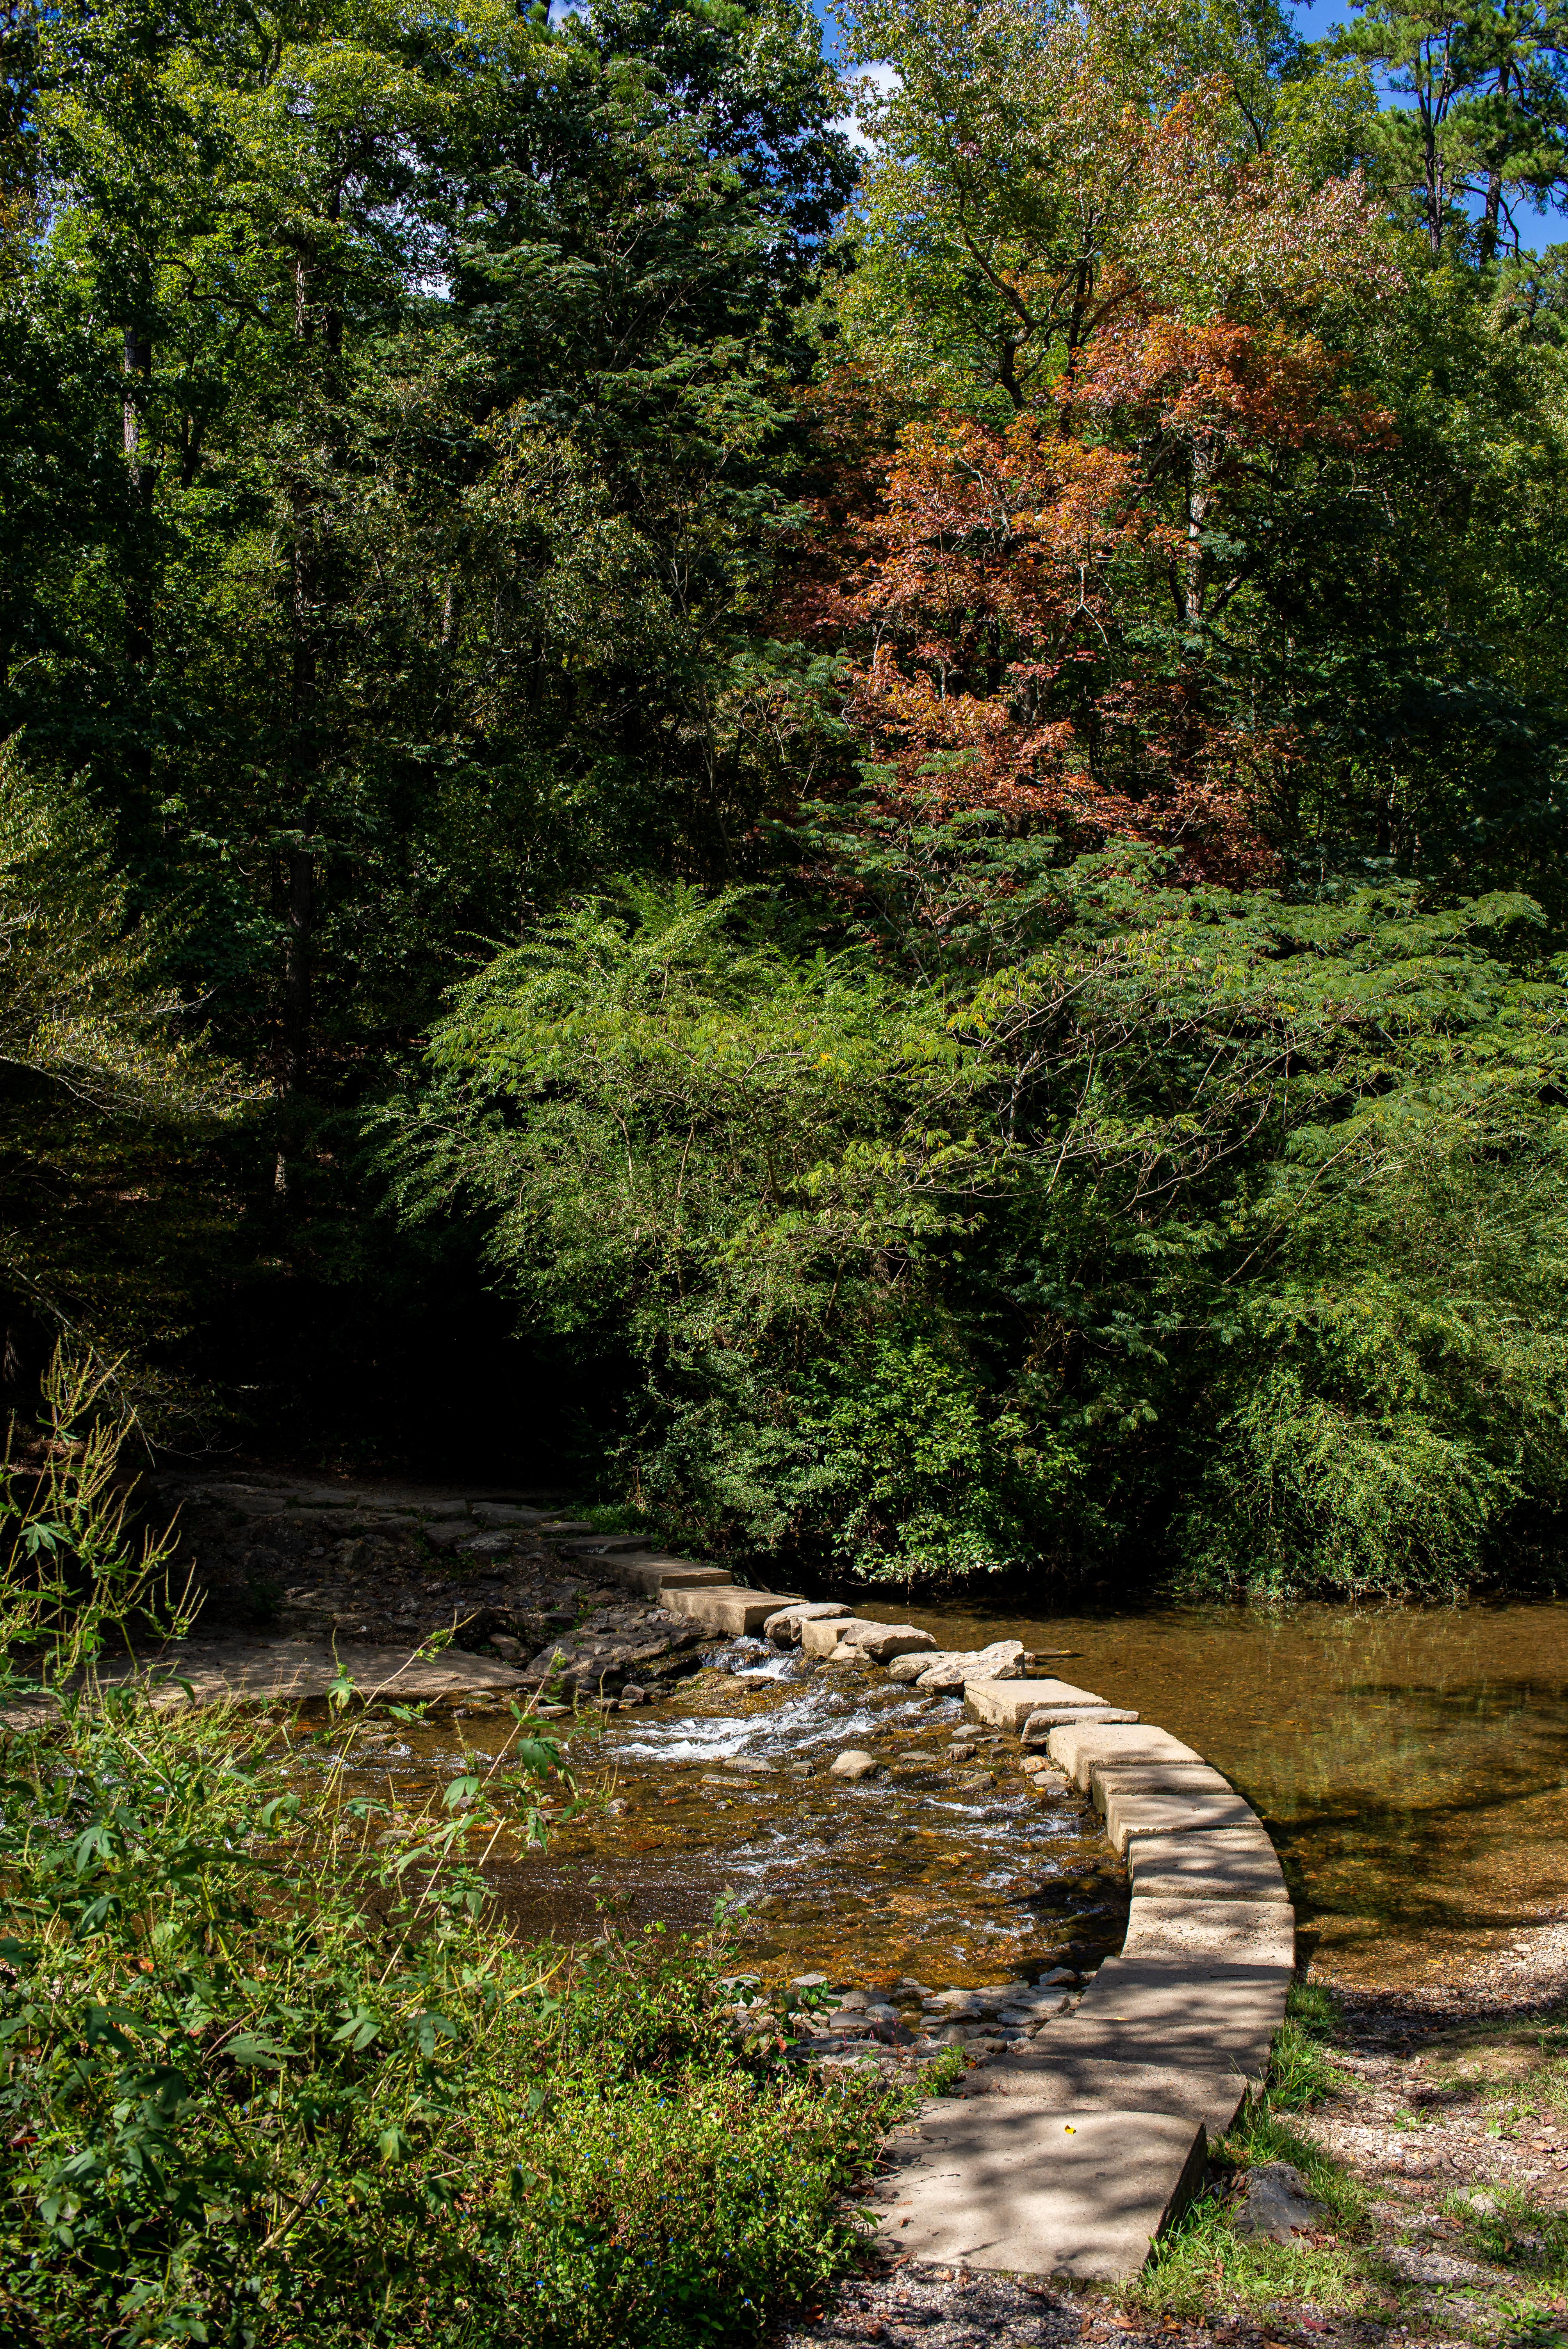 A stone walkway bridging the gab across a creek